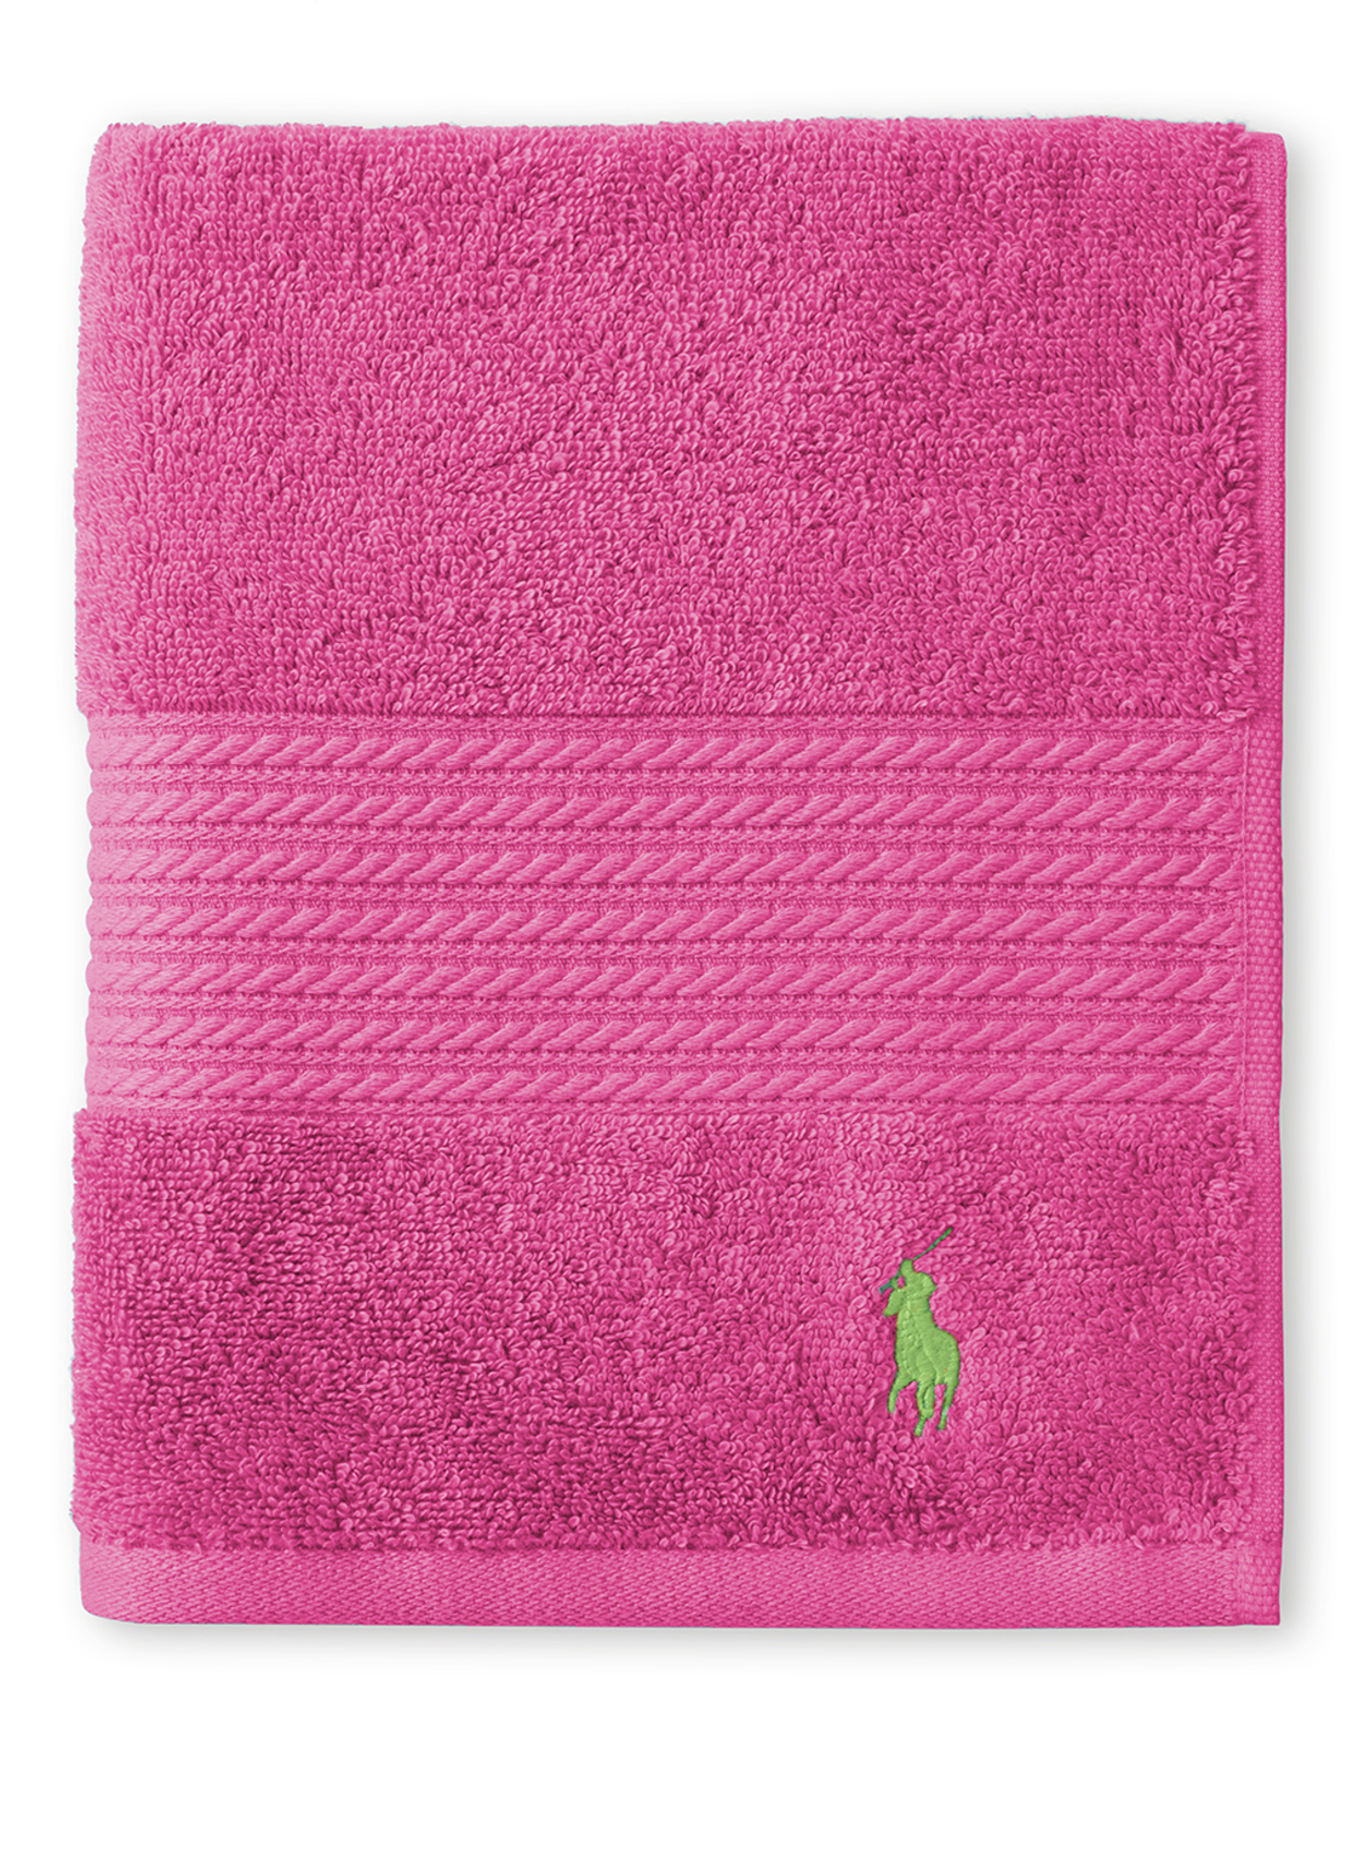 RALPH LAUREN HOME Handtuch POLO PLAYER, Farbe: ROSA (Bild 1)